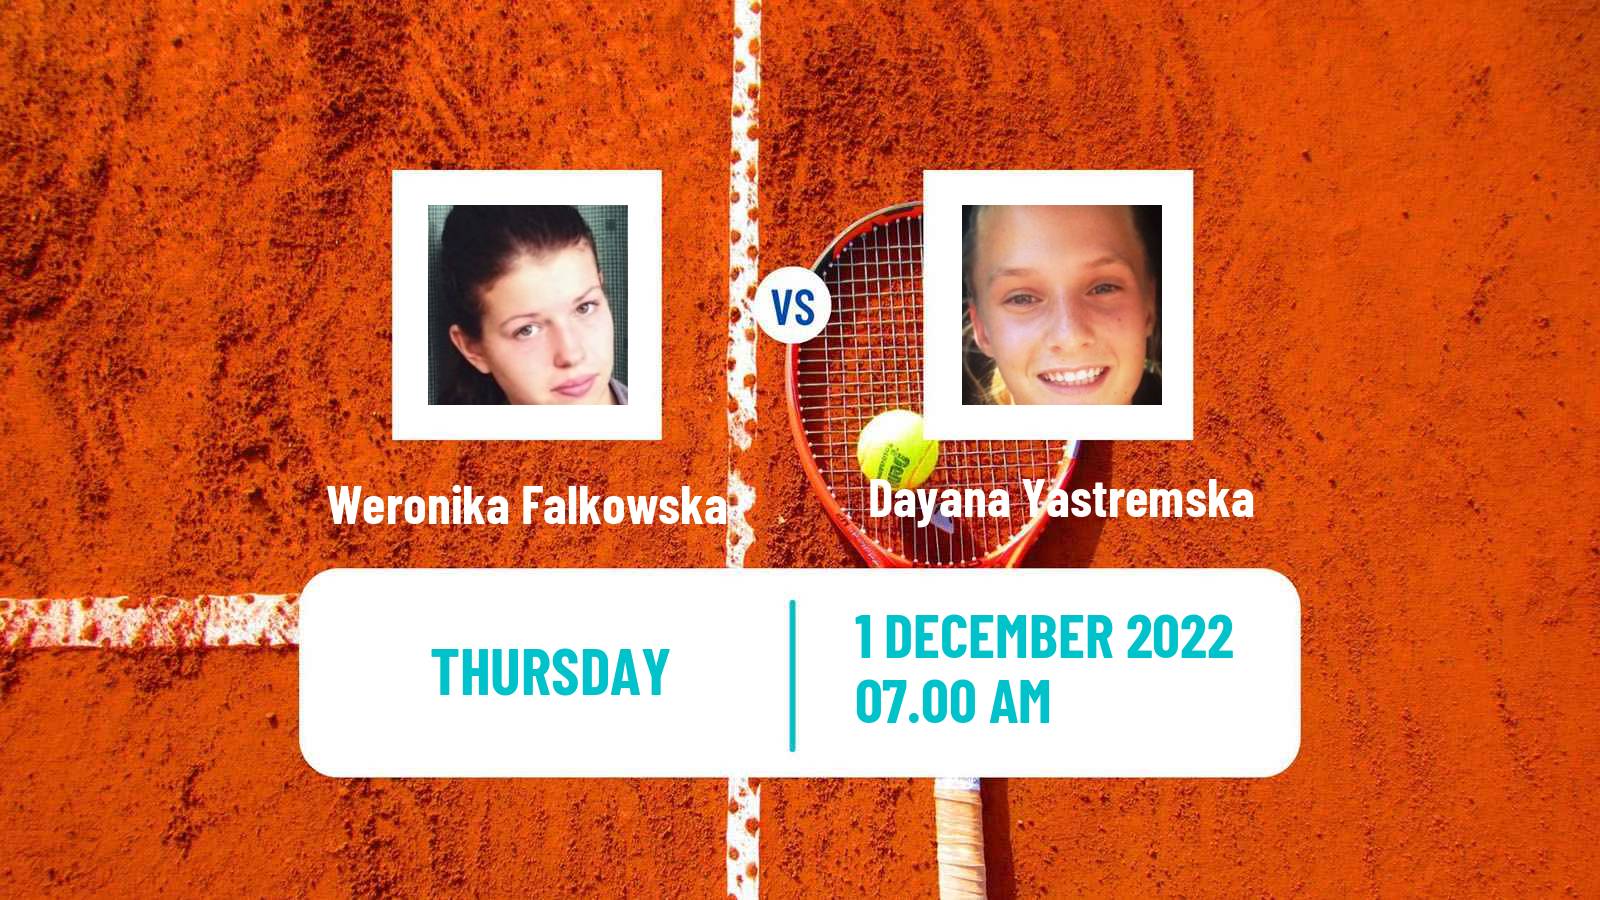 Tennis ATP Challenger Weronika Falkowska - Dayana Yastremska